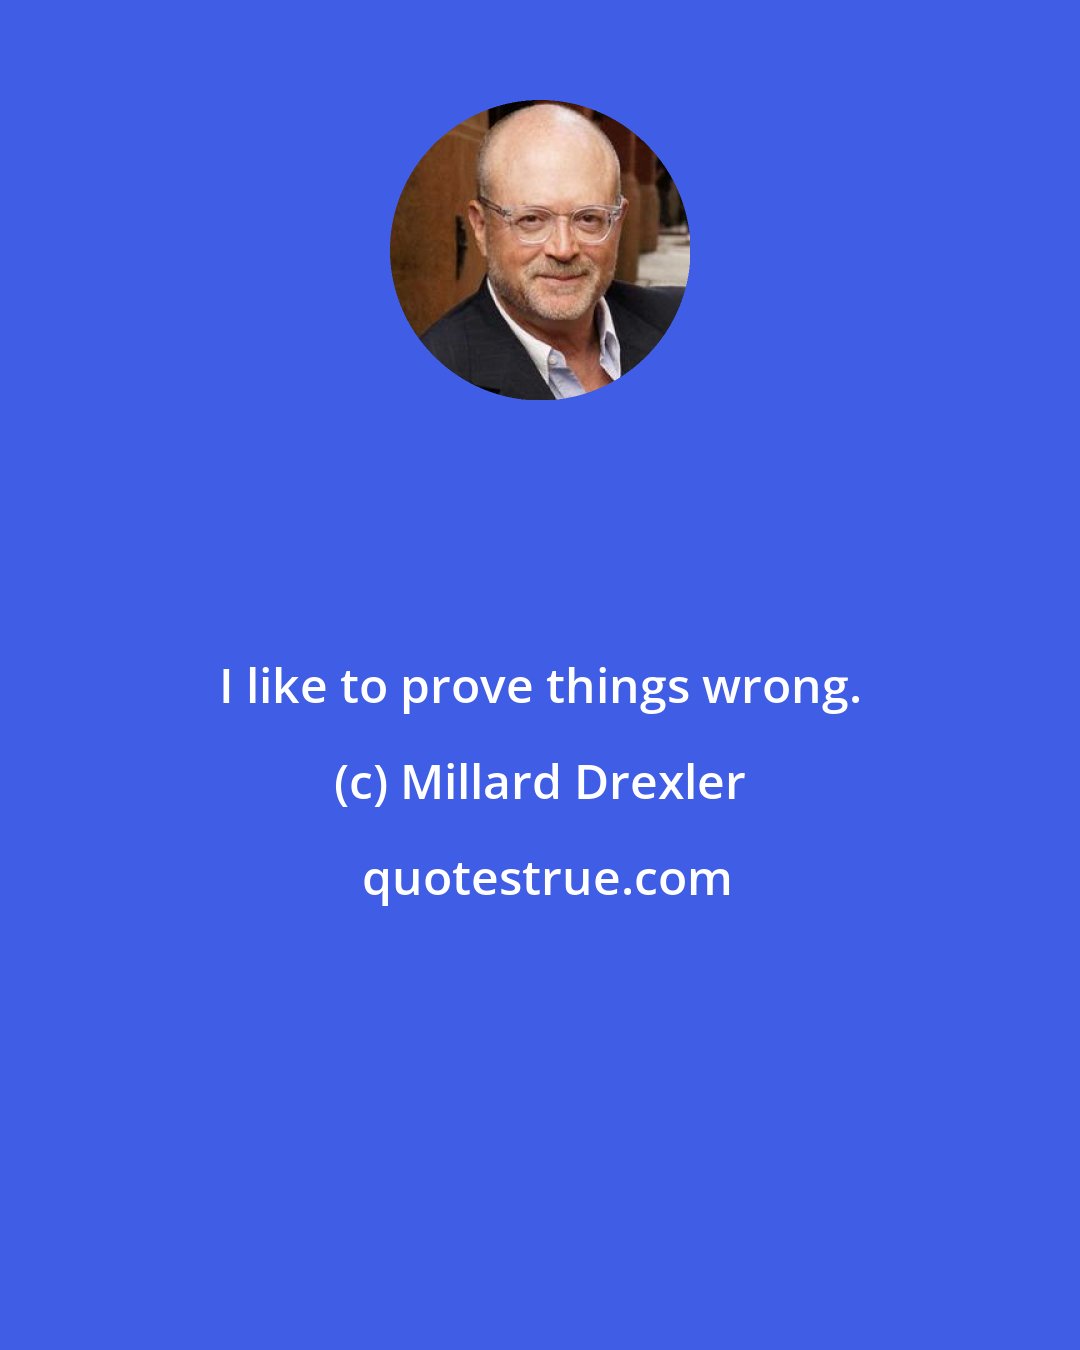 Millard Drexler: I like to prove things wrong.